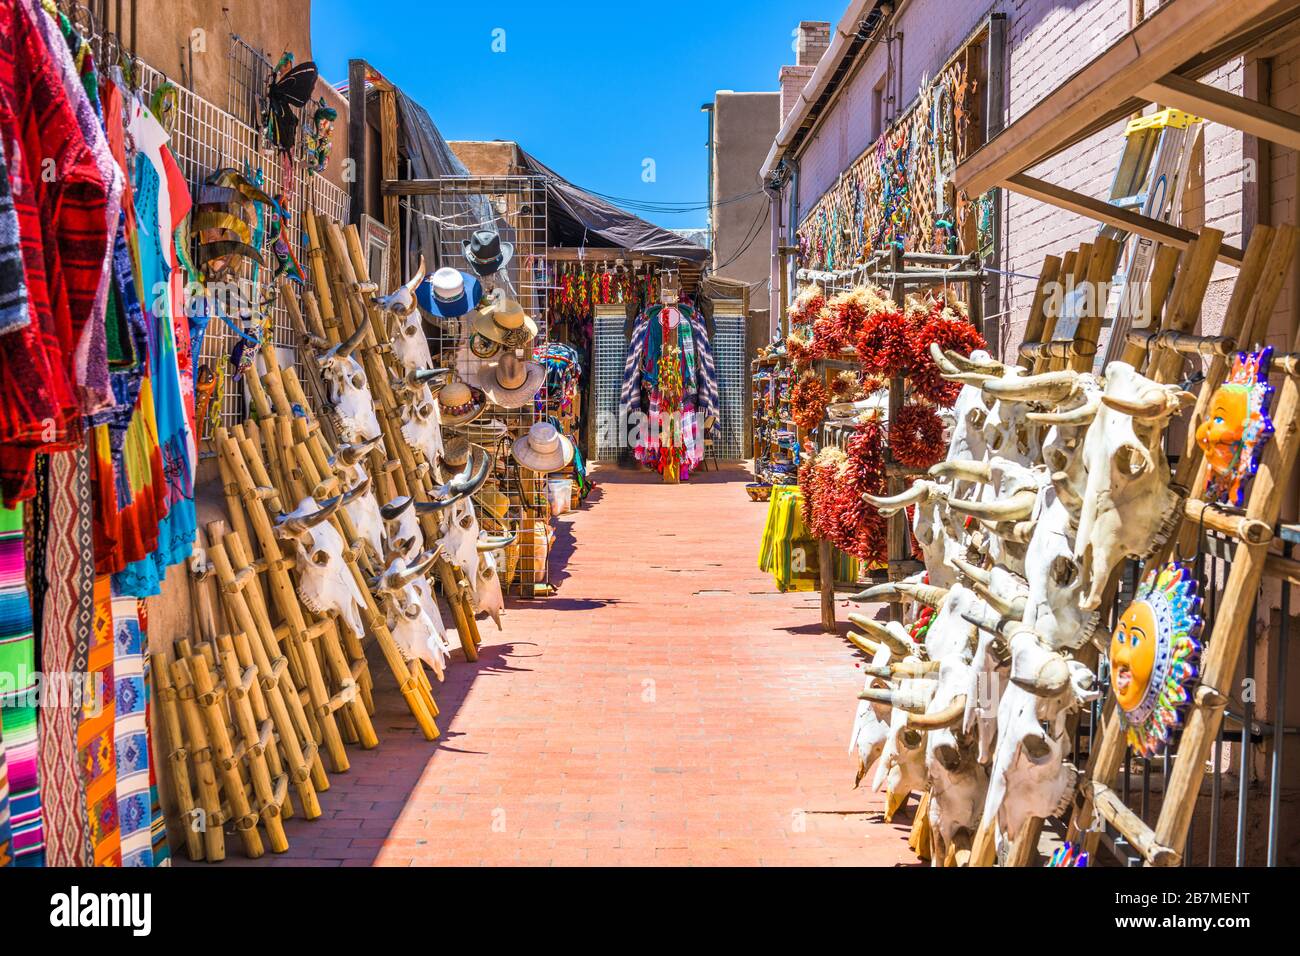 Santa Fe, New Mexico, USA market selling traditional southwestern goods. Stock Photo